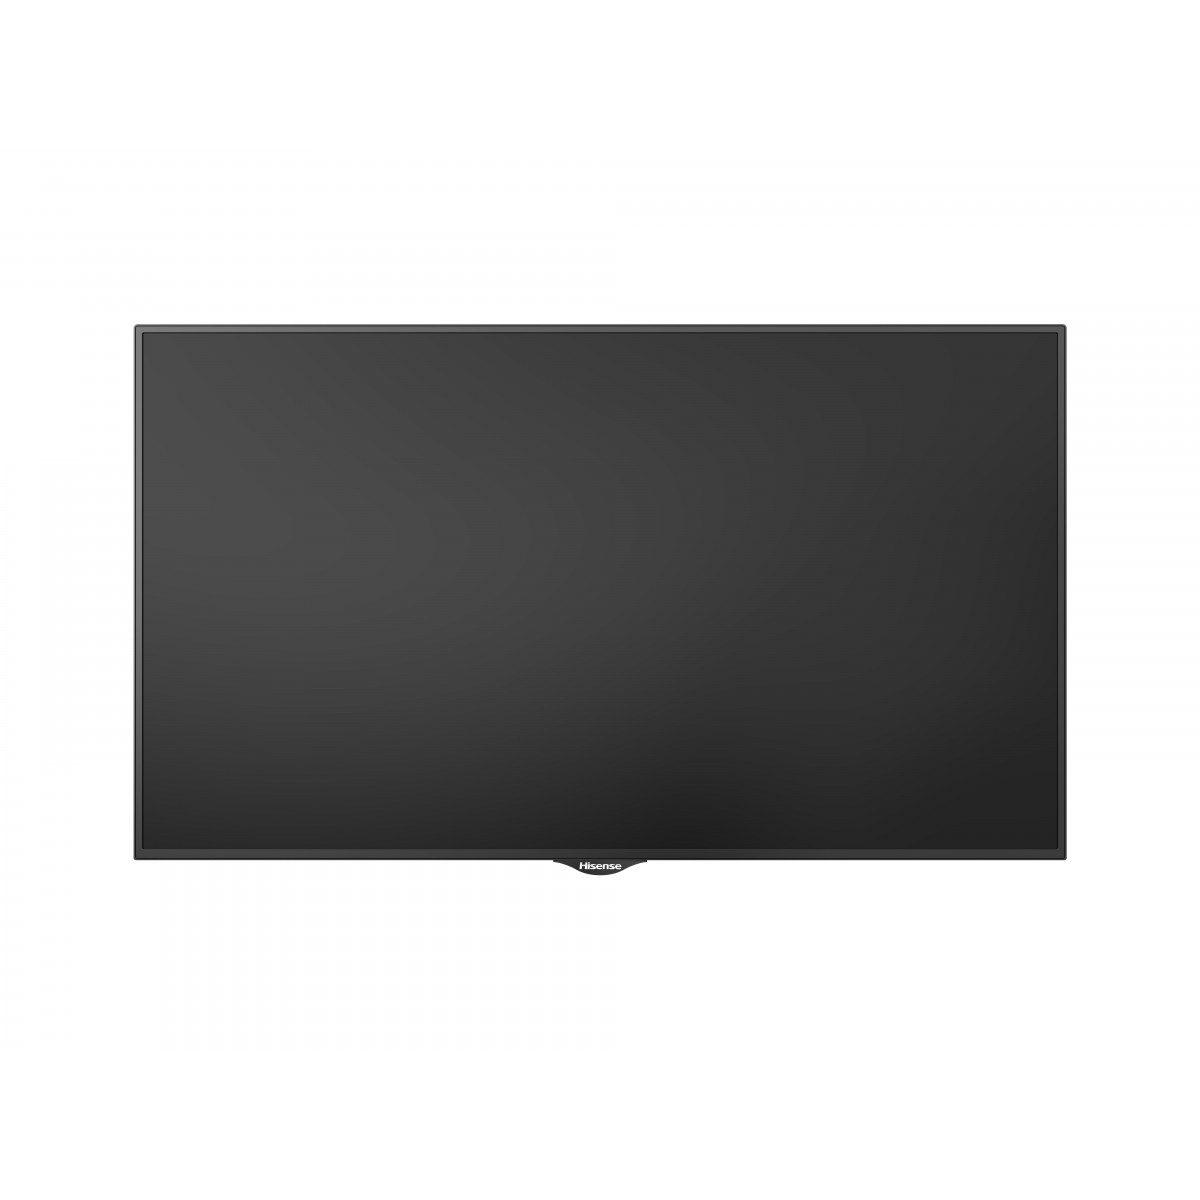 Hisense 86BM66AE - Digital signage flat panel - 2.18 m (86) - 3840 x 2160 pixels - Wi-Fi - 24-7